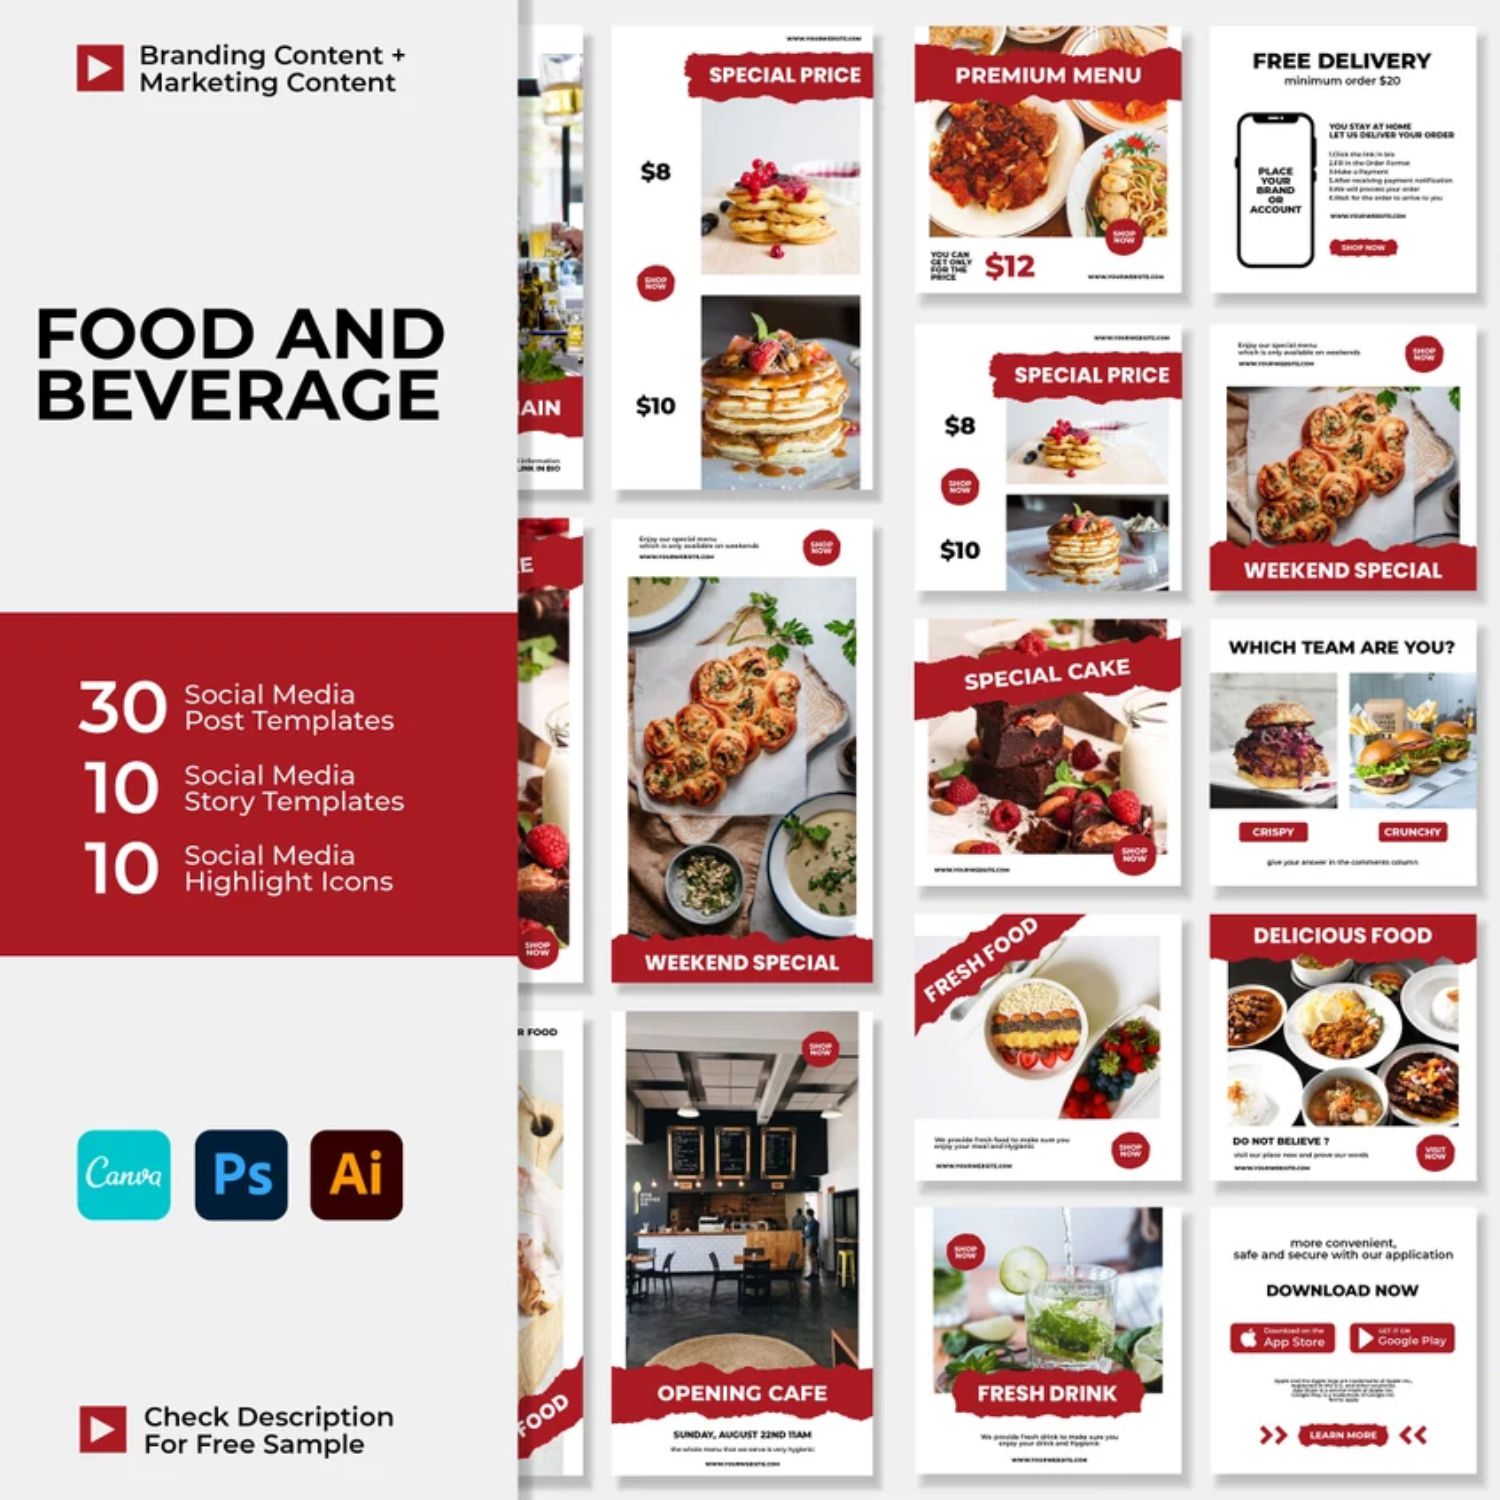 Food & Beverage Social Media Marketing Templates Cover Image.